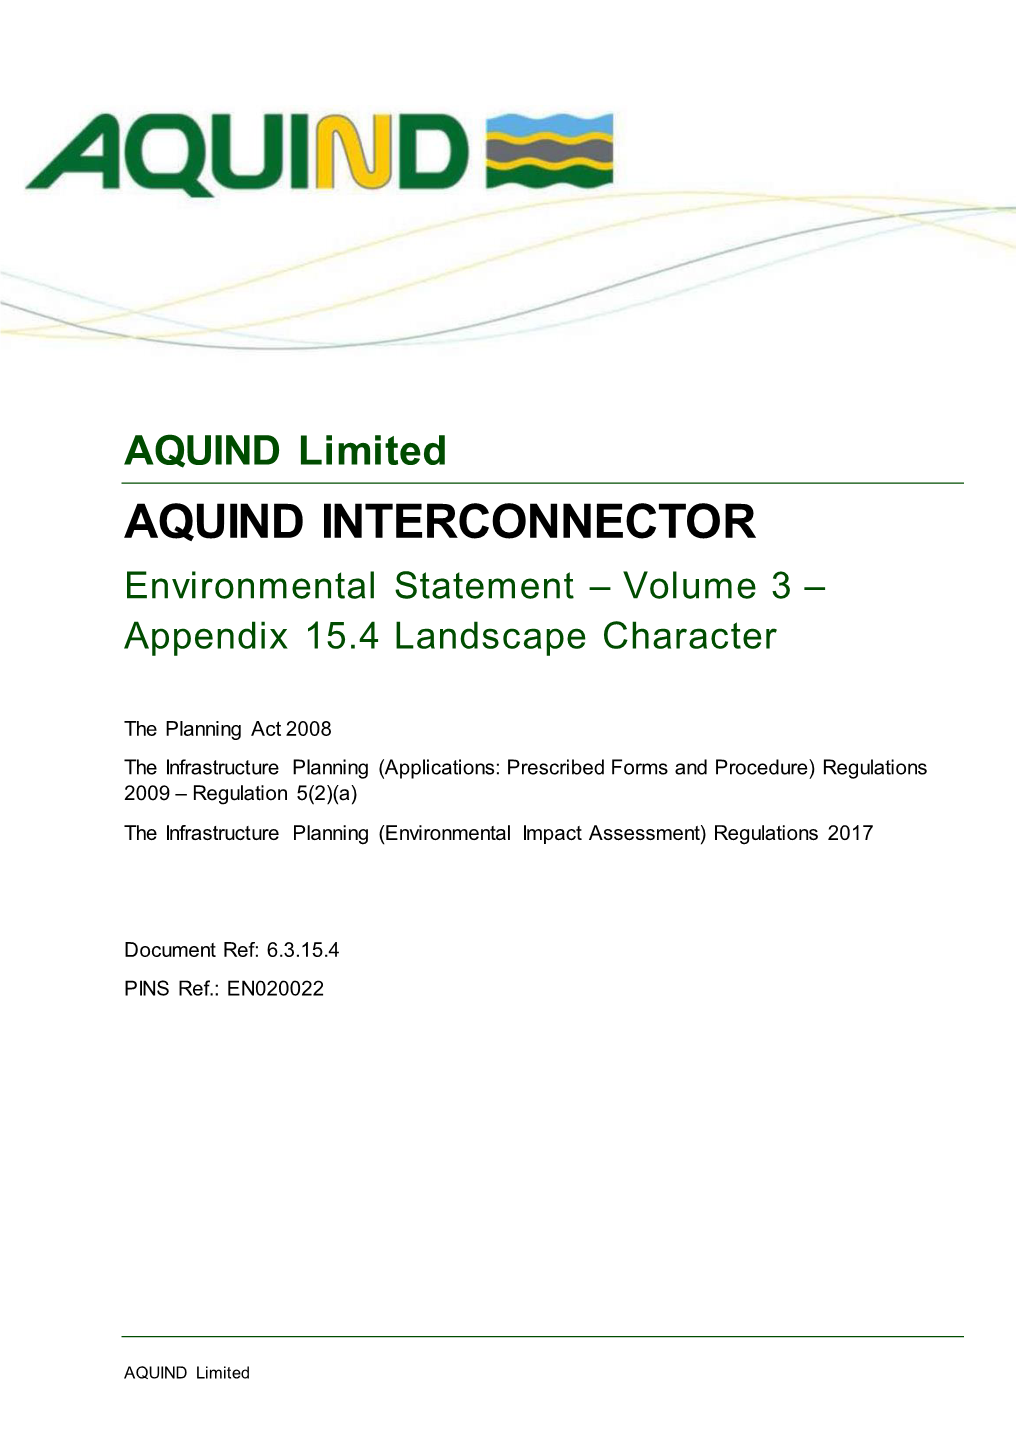 AQUIND INTERCONNECTOR Environmental Statement – Volume 3 – Appendix 15.4 Landscape Character